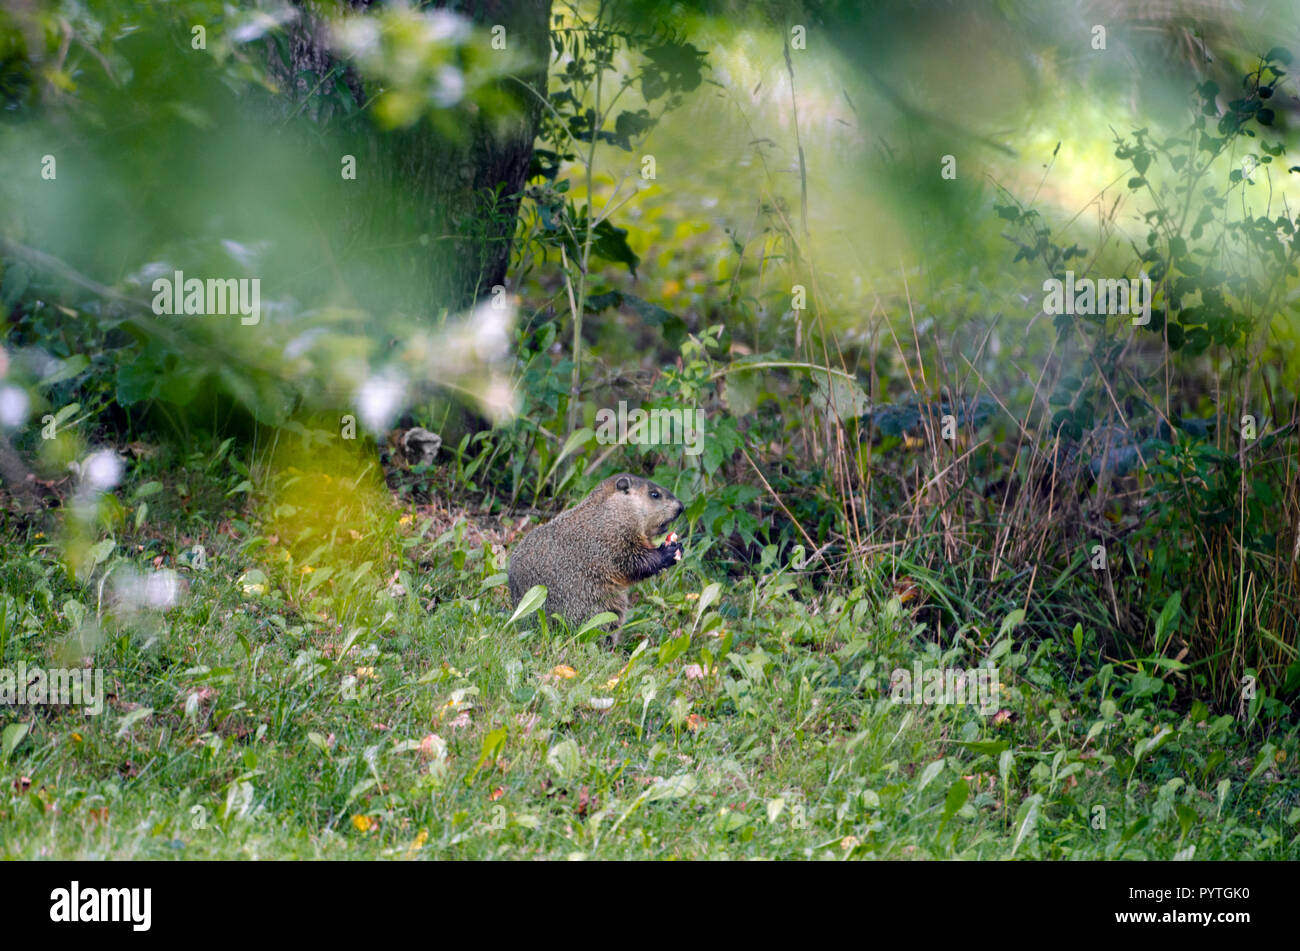 Groundhog or woodchuck eating an apple Stock Photo